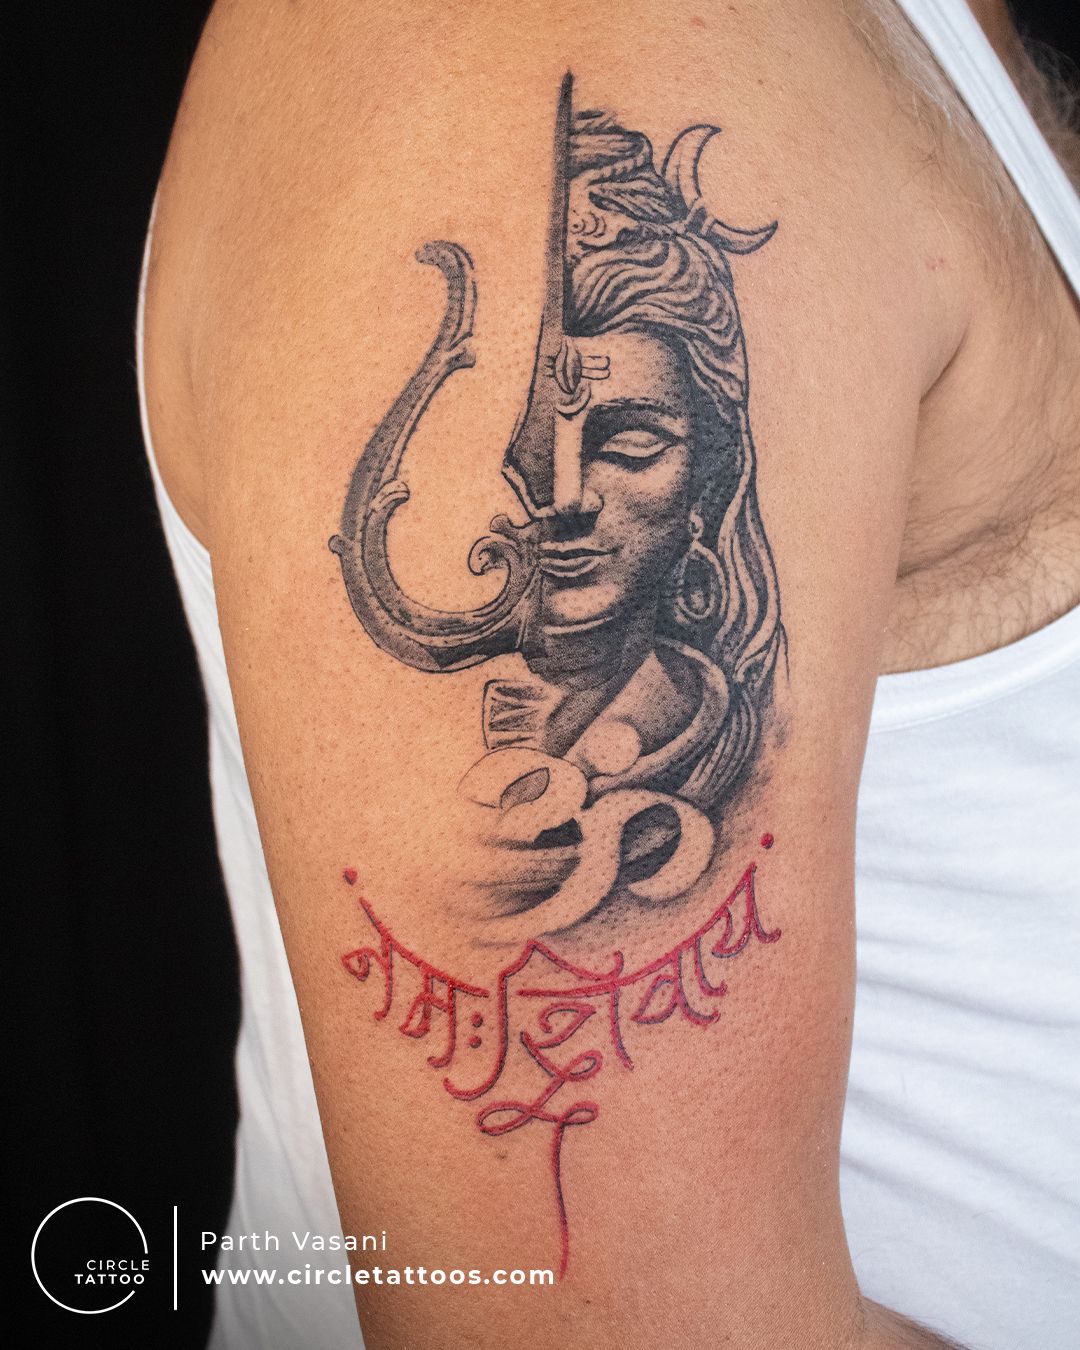 Searching trishul 3rd eye  Dev Tattoos  Tattoo Artist in New Delhi